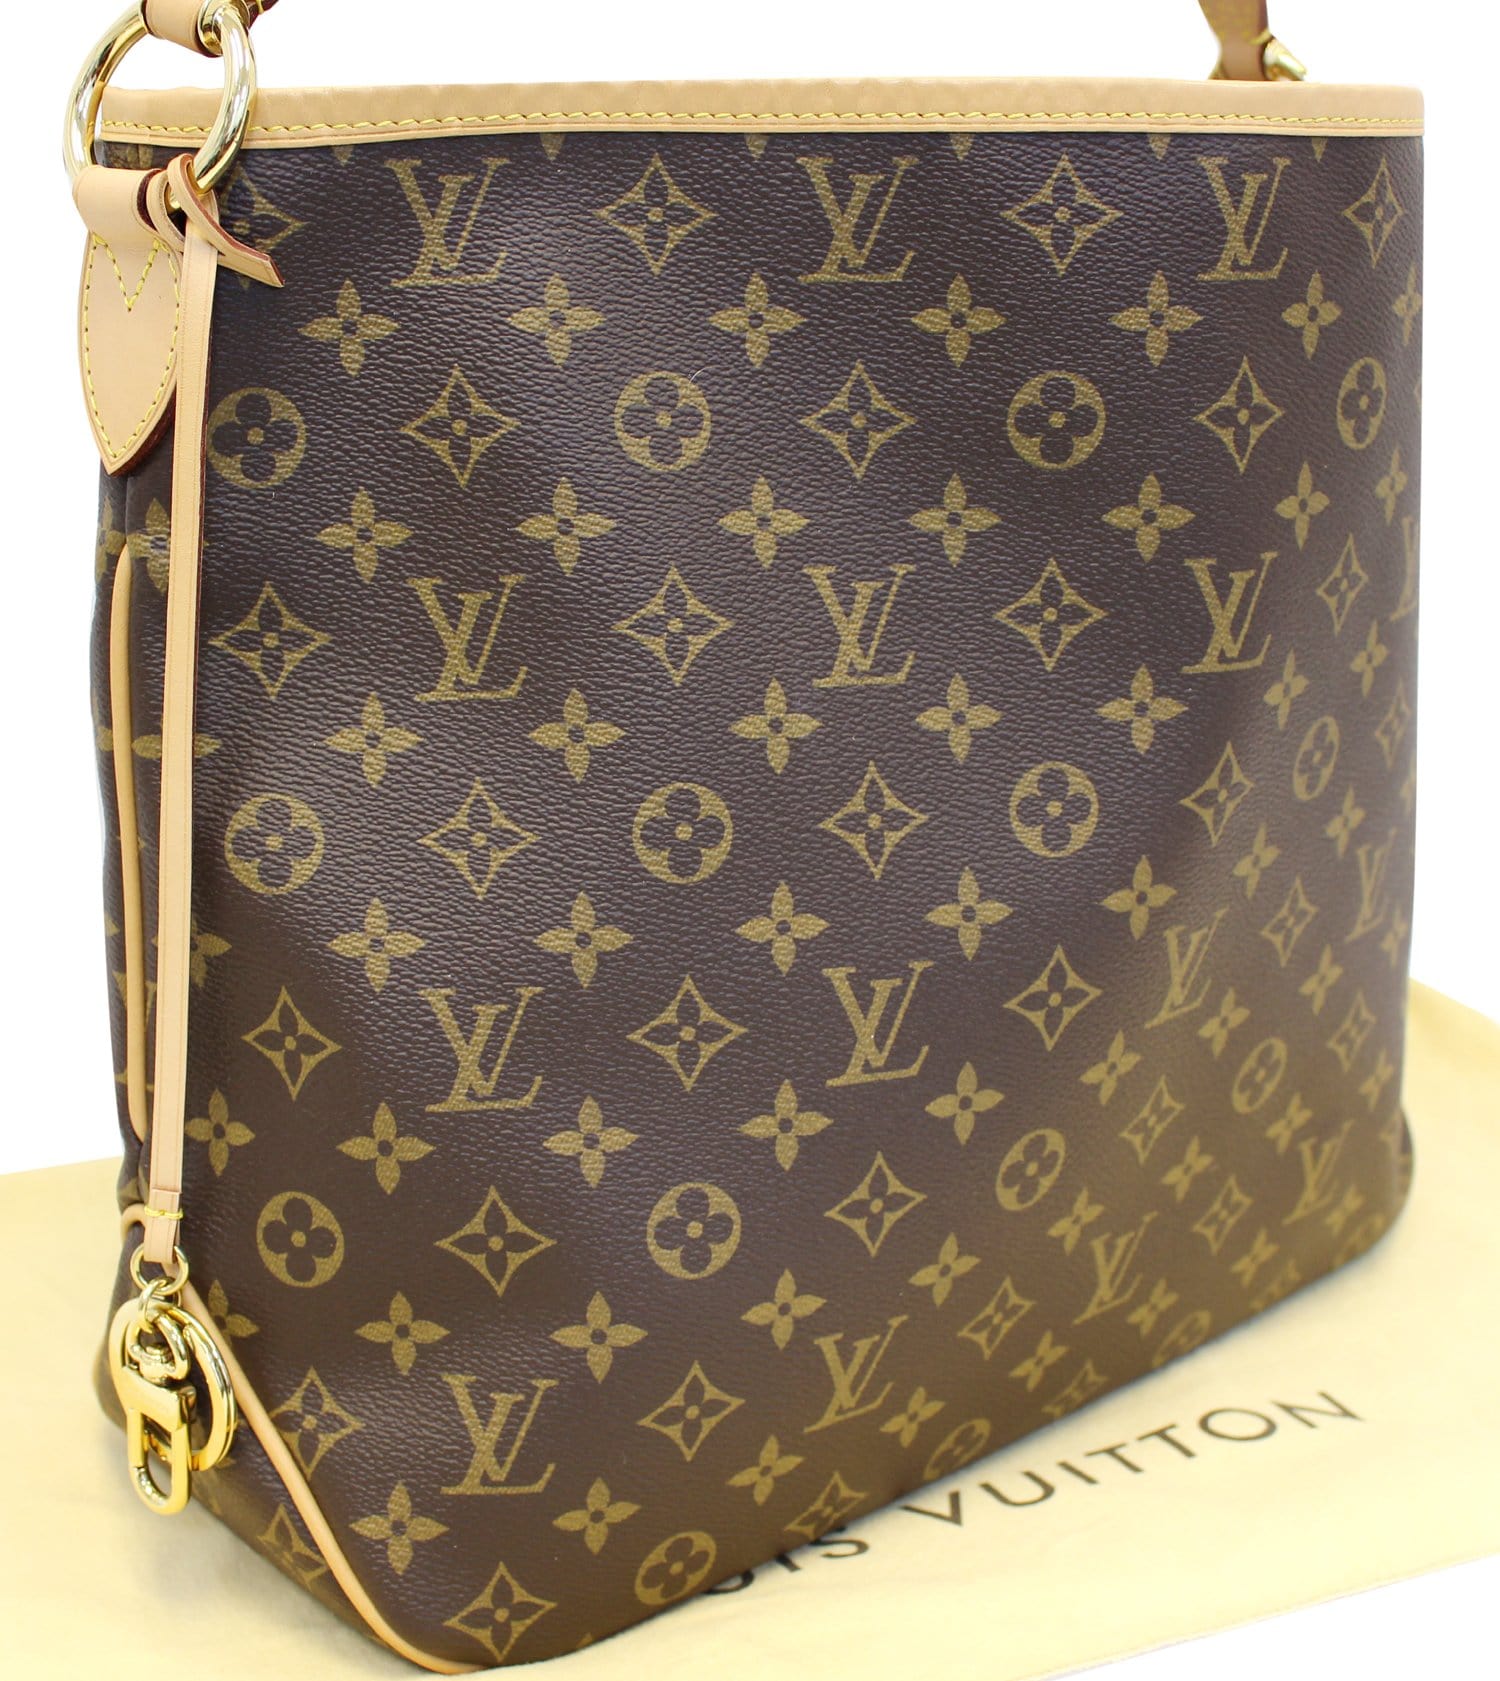 Louis Vuitton Delightful NM Handbag Damier MM White 2285161